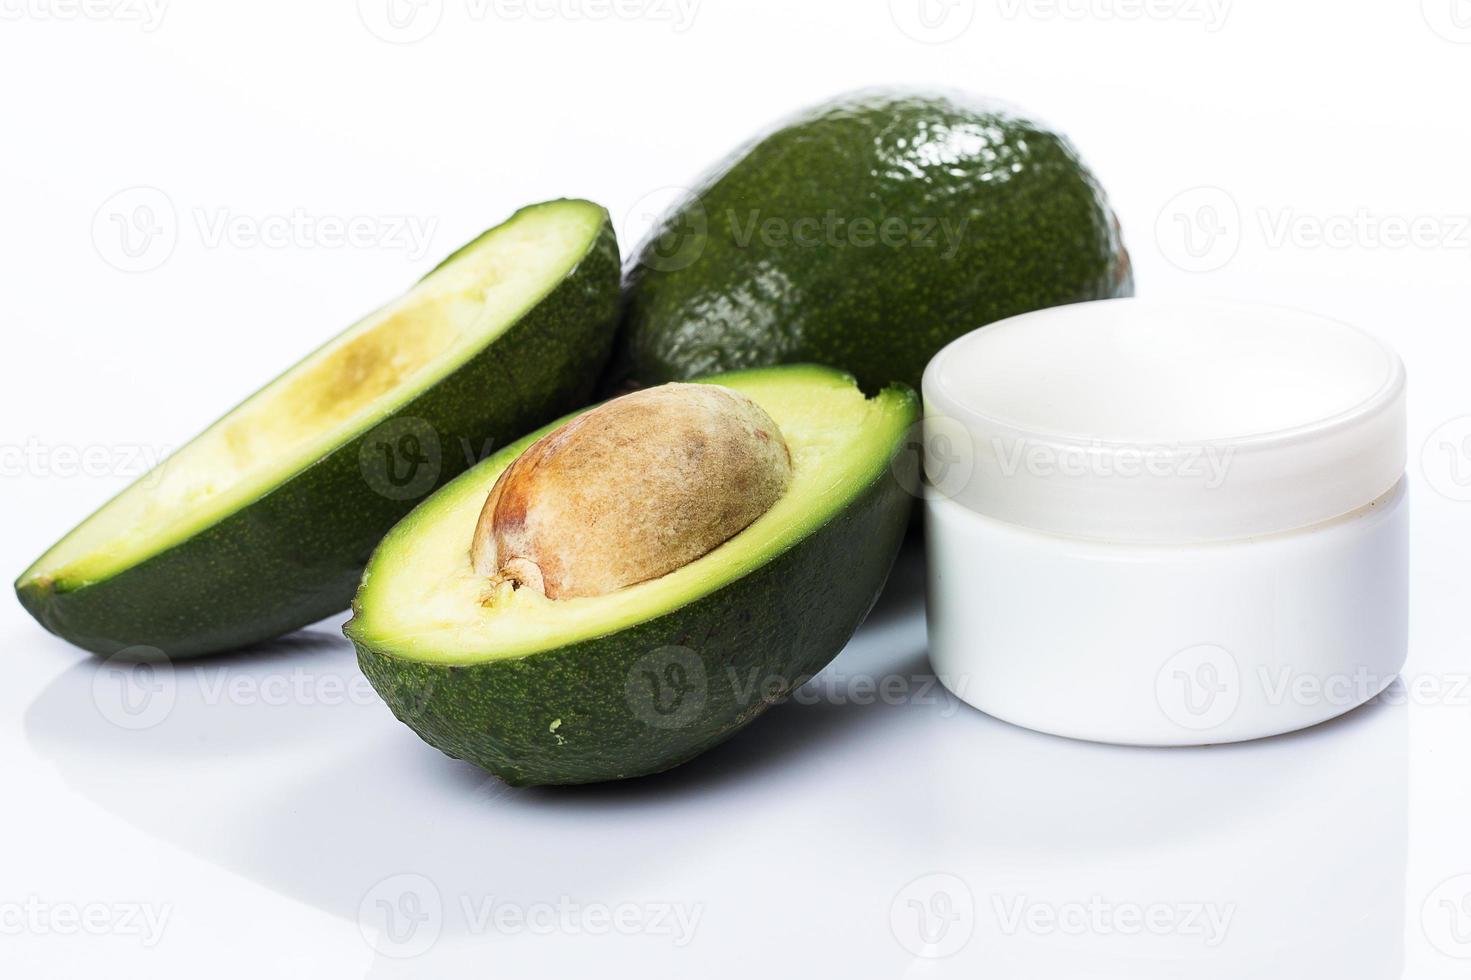 Avocado and moisturizer cream photo